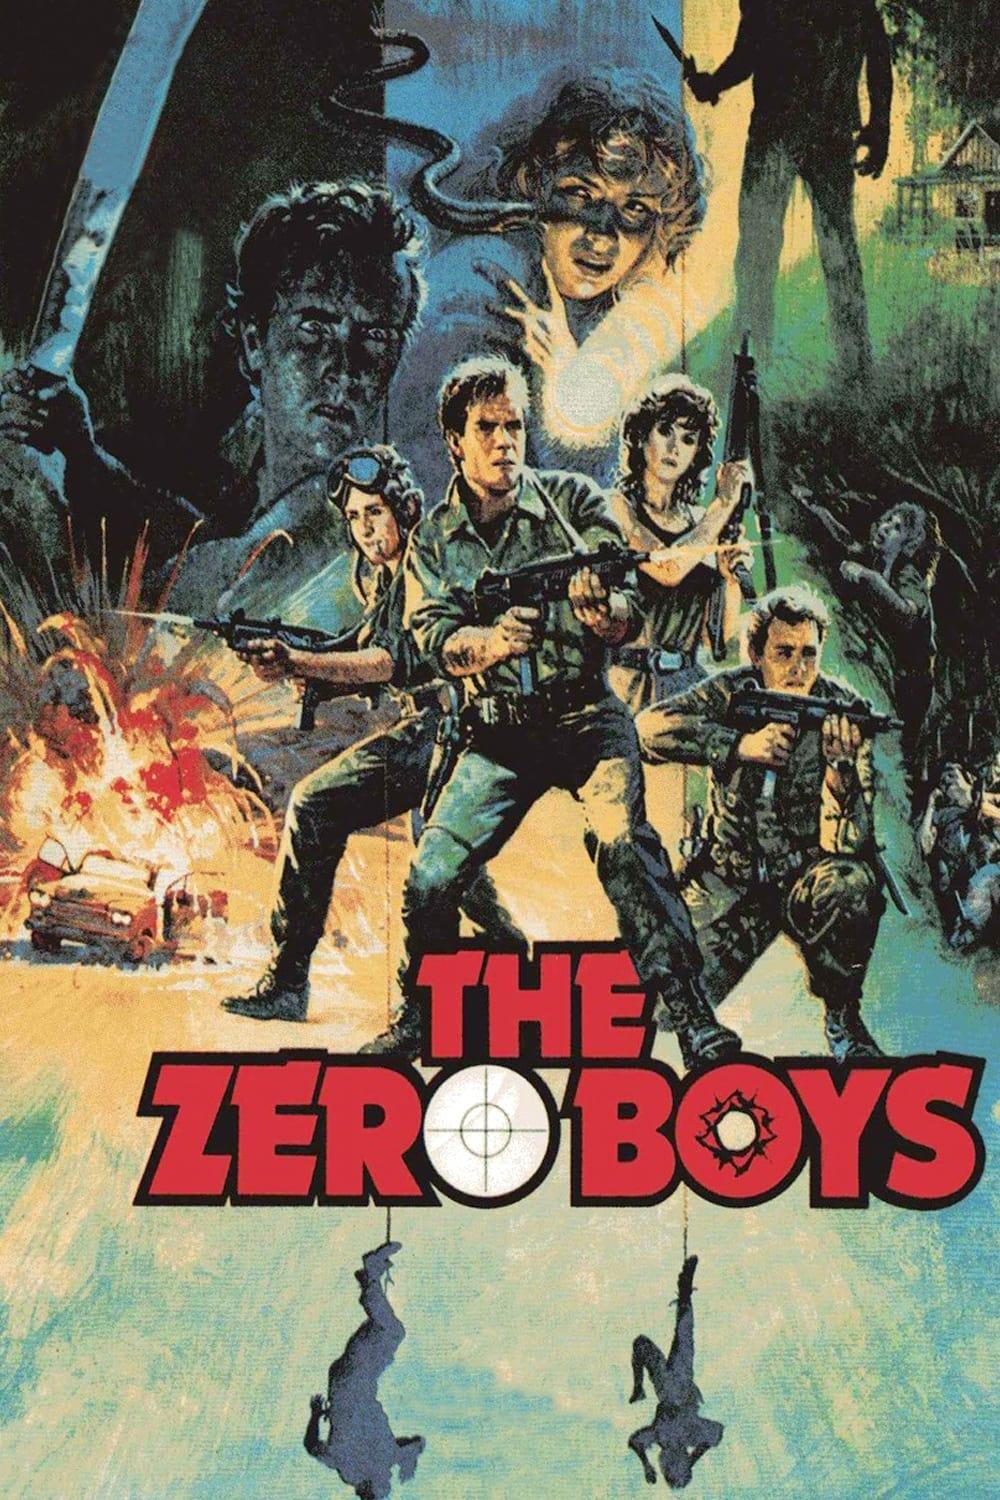 The Zero Boys poster